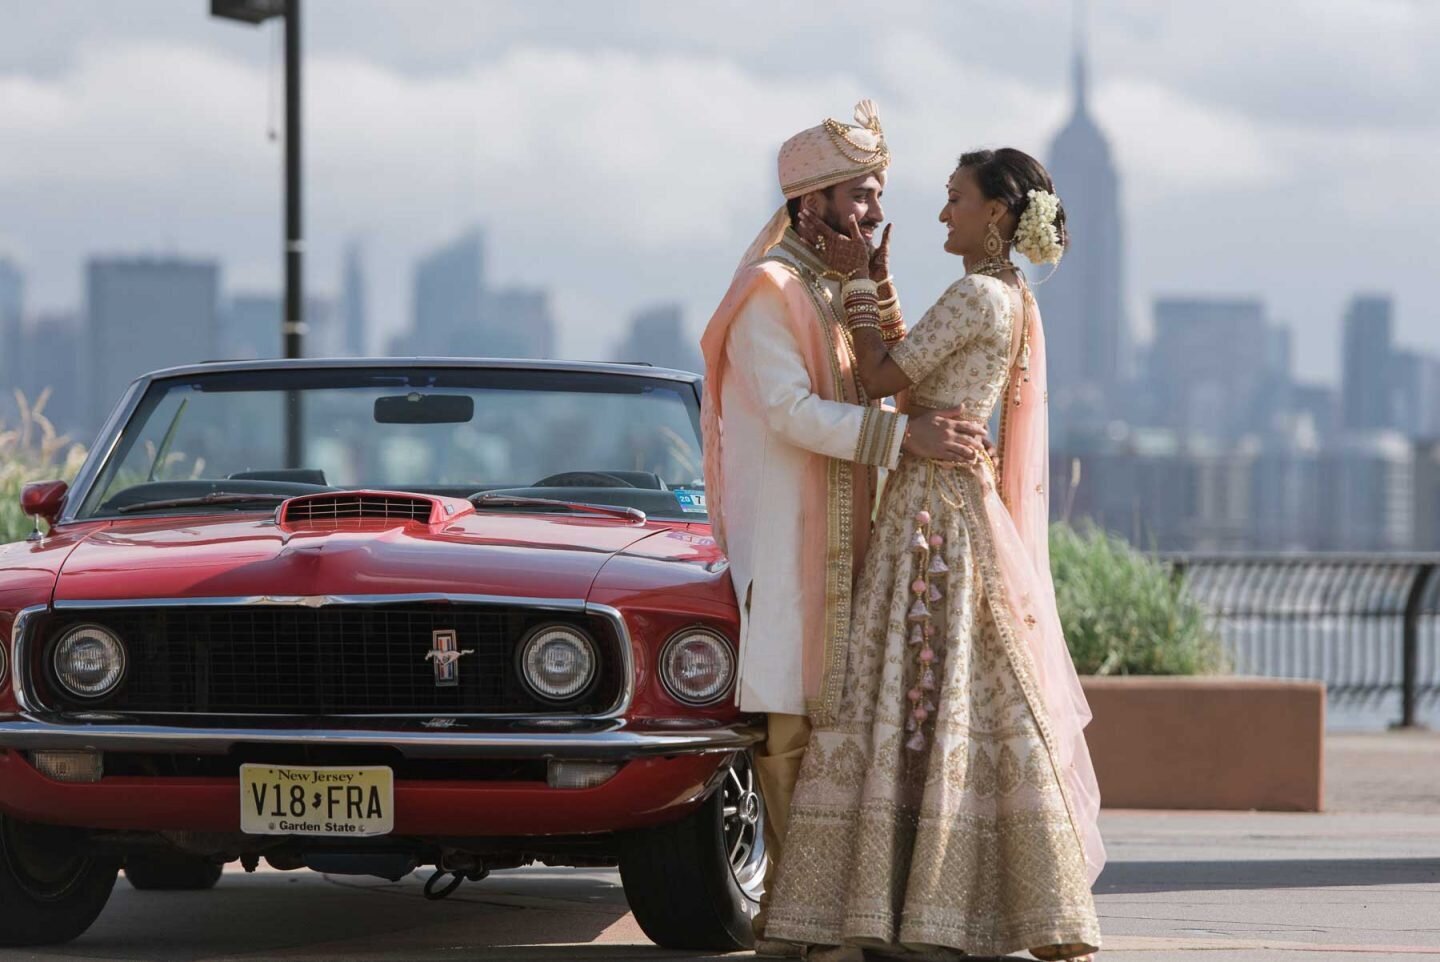 hyatt-regency-jersey-city-indian-wedding-01-2-1440x962